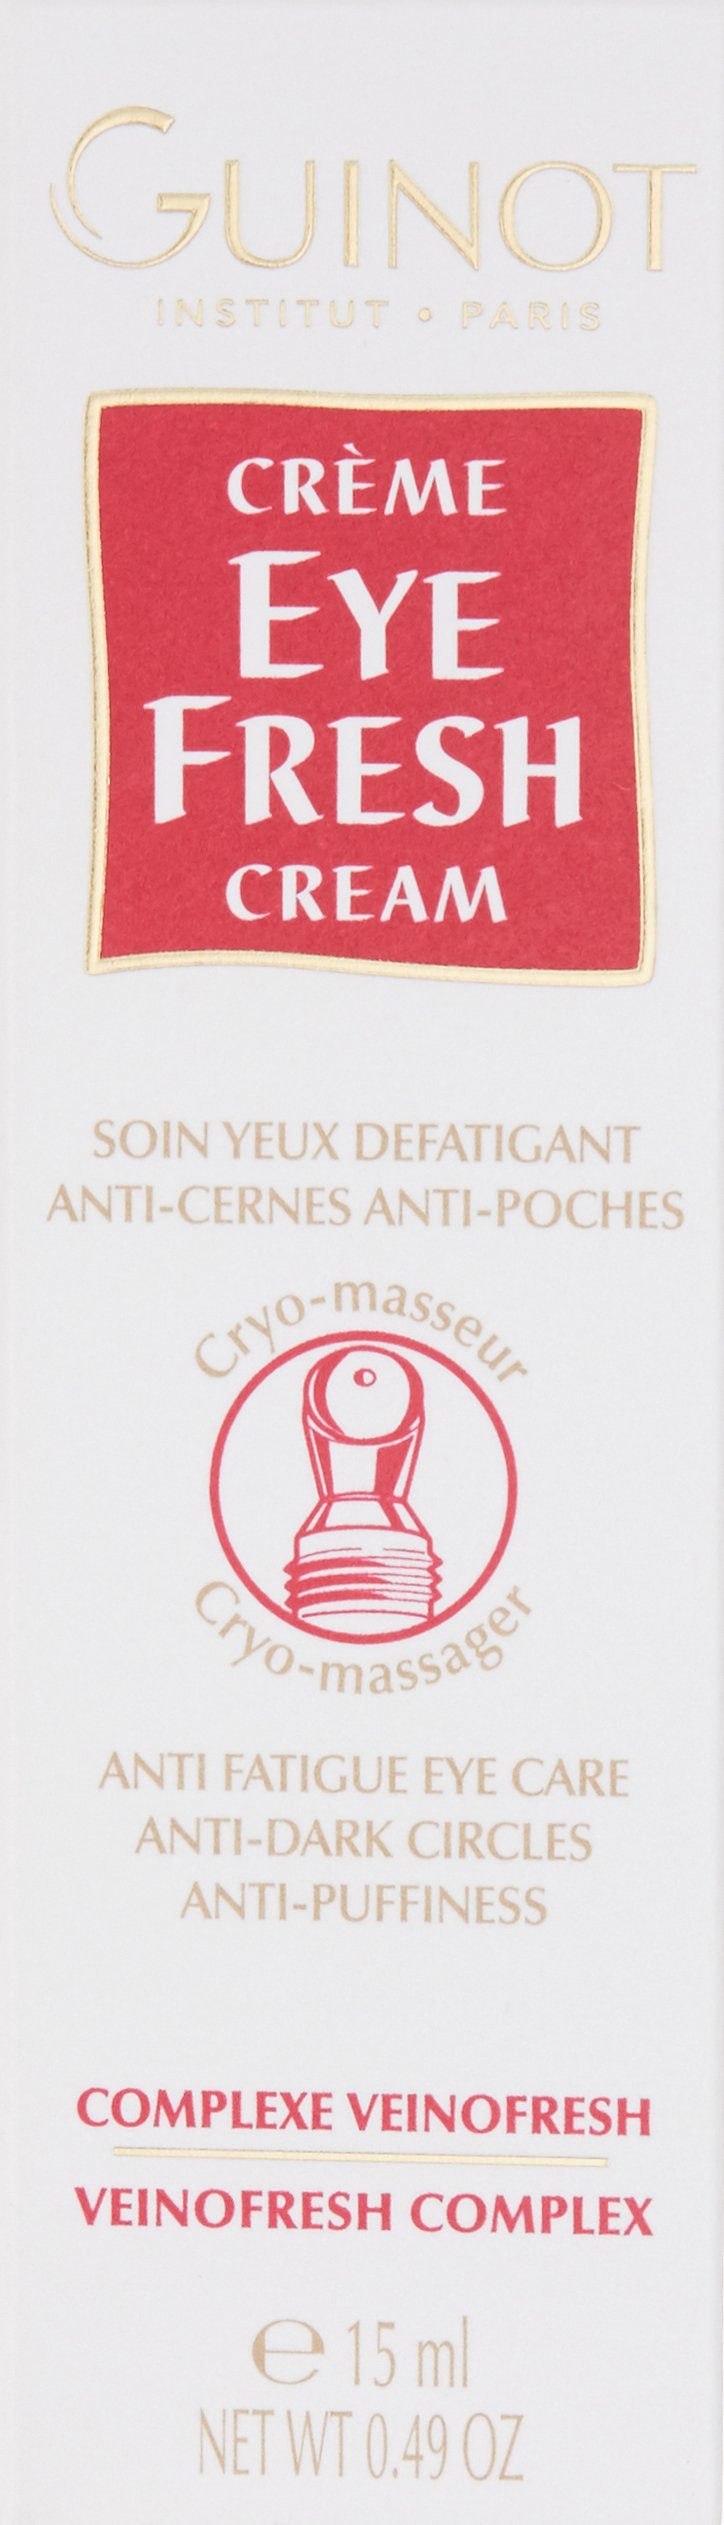 [Australia] - Guinot Eye Fresh Cream, 0.49 oz 